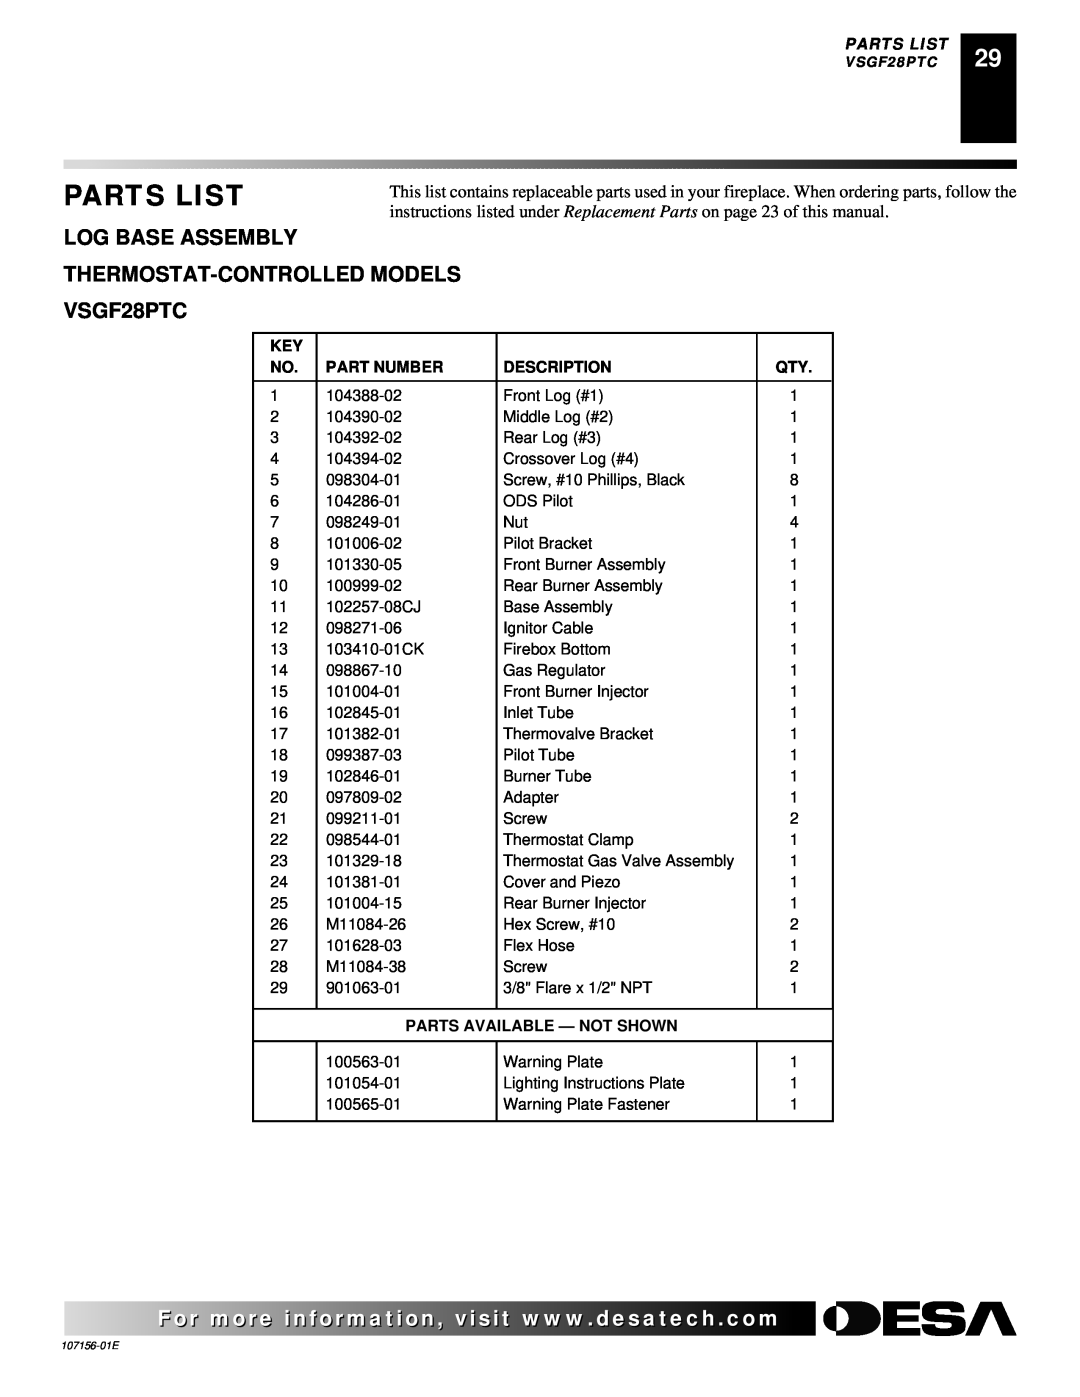 Vanguard Heating 107156-01E.pdf Log Base Assembly Thermostat-Controlledmodels, Parts List, VSGF28PTC, Part Number 